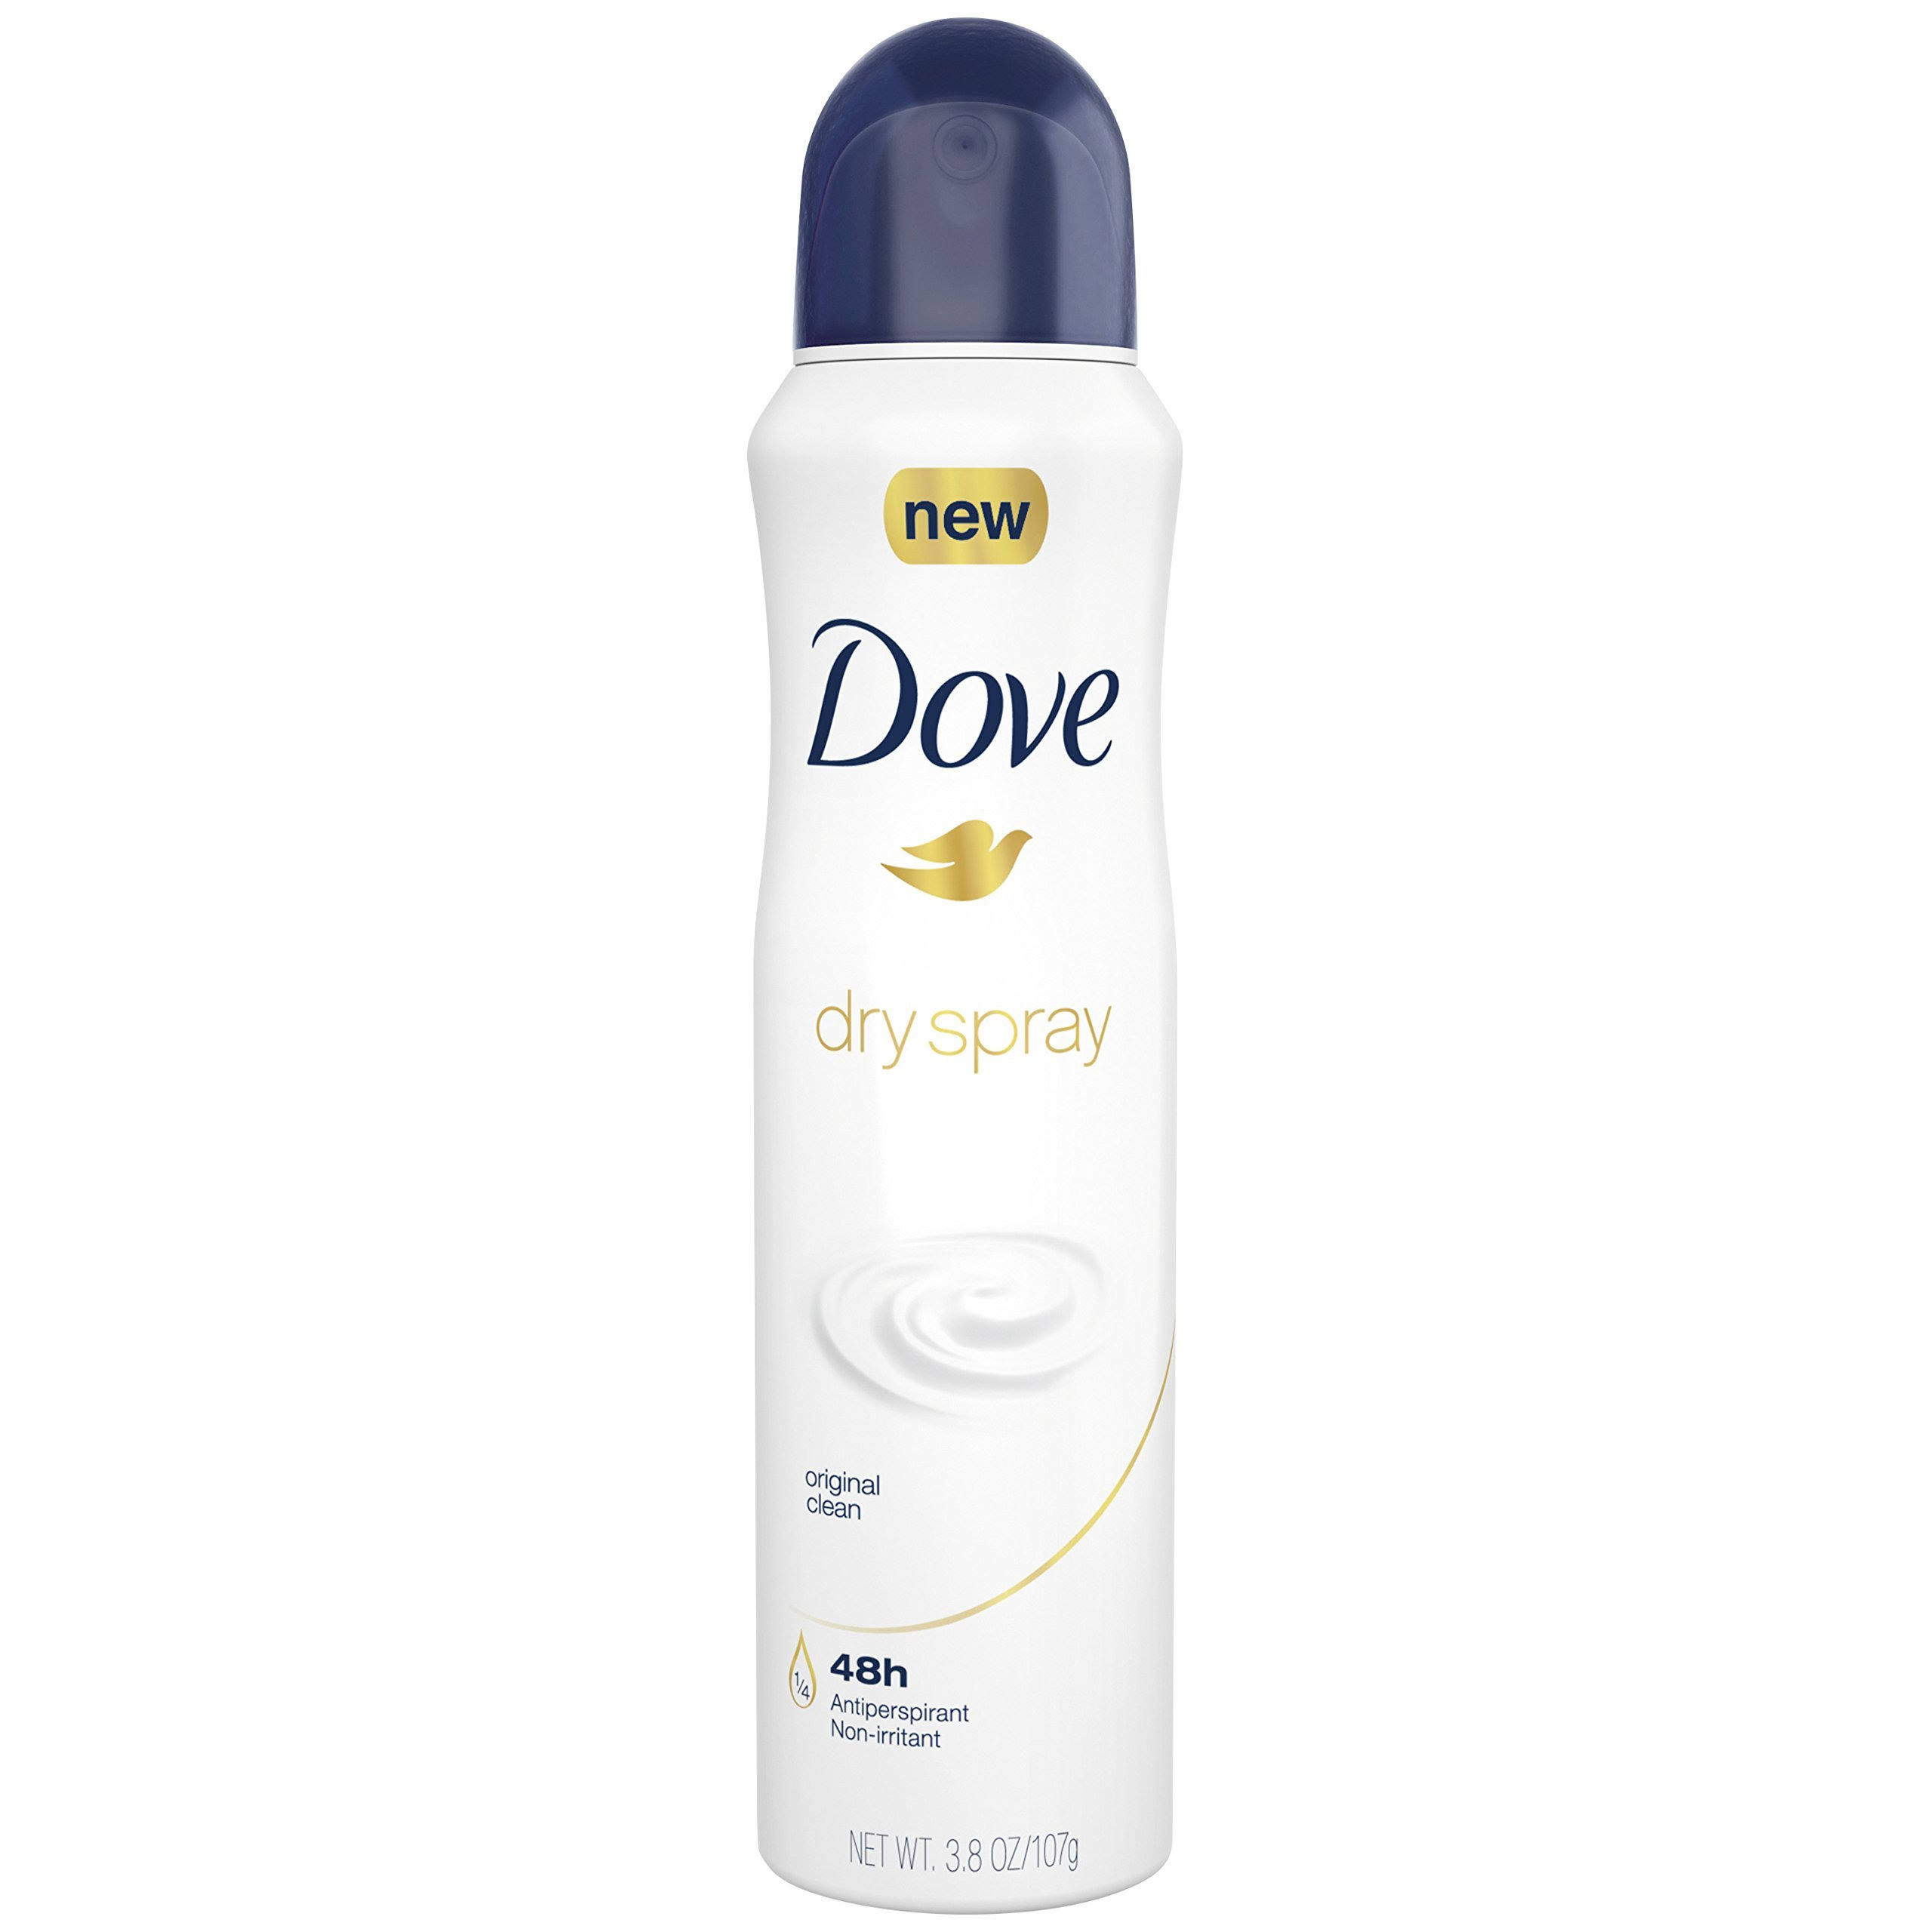 Dove Dry Spray Antiperspirant - 3.8oz, Original Clean